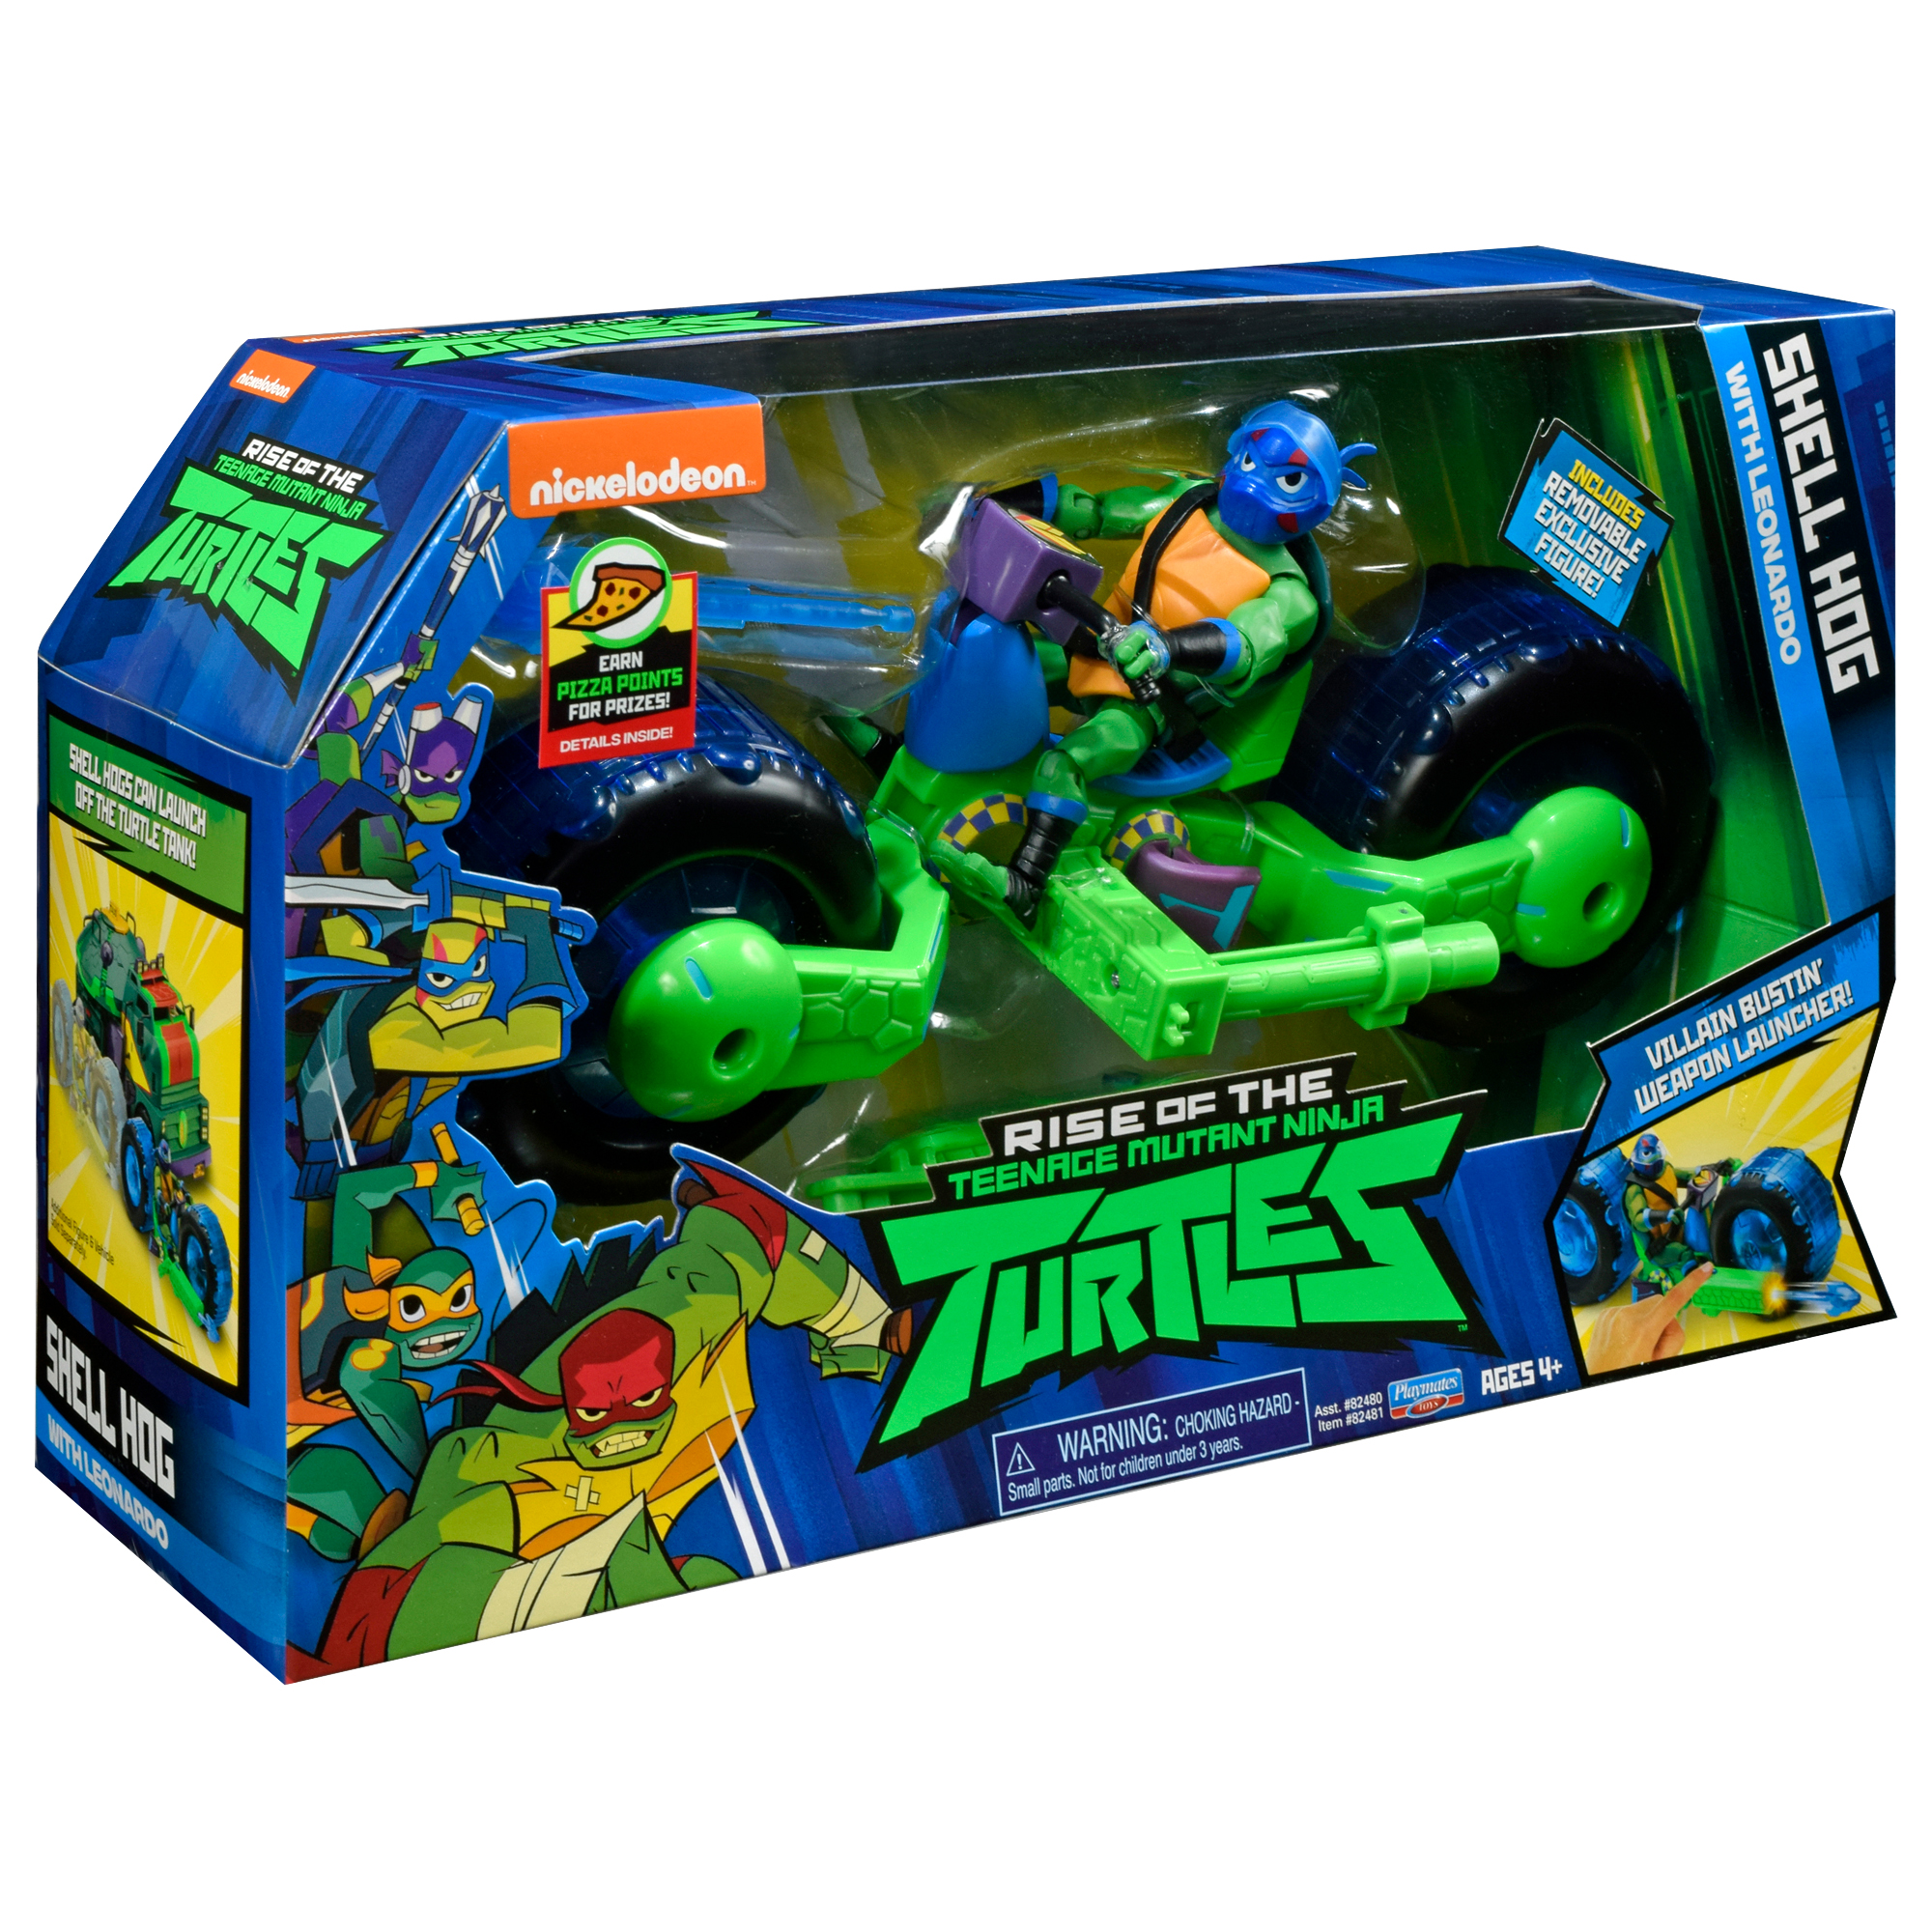 New To Order Rise of the Teenage Mutant Ninja Turtles Figures